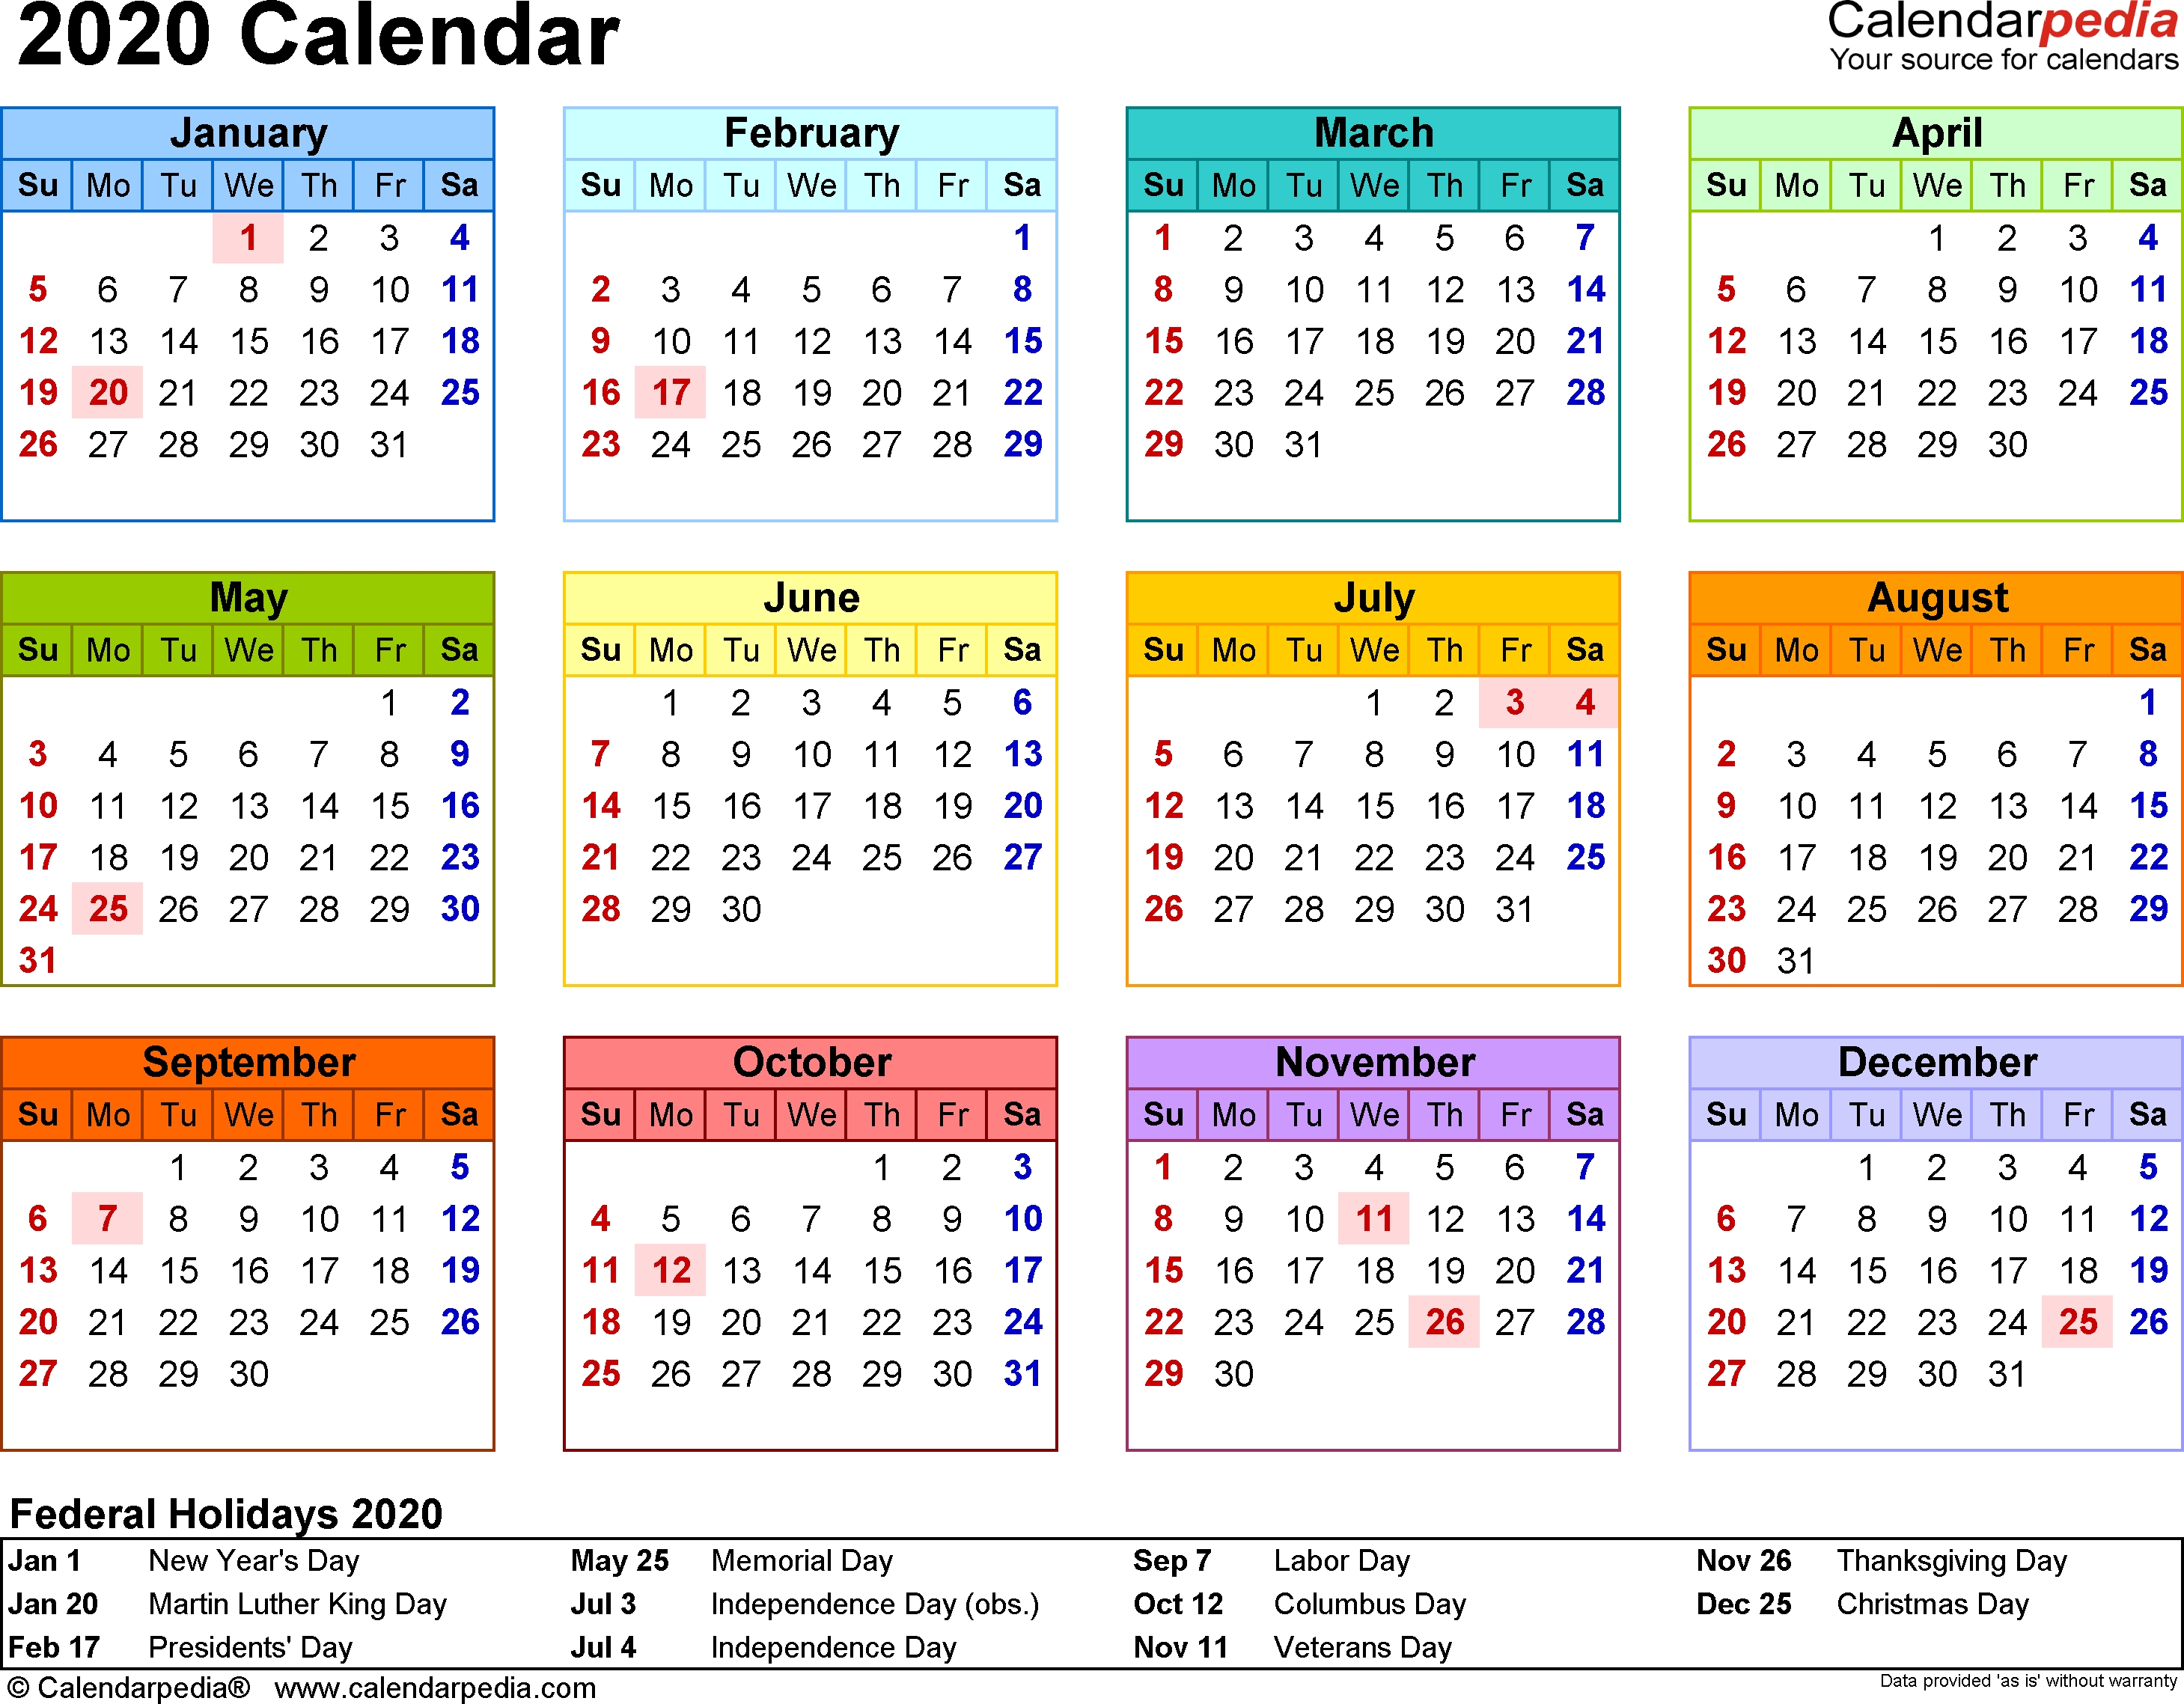 2020 Calendar Pdf - 17 Free Printable Calendar Templates with Free 2020Printable Calendars Without Downloading